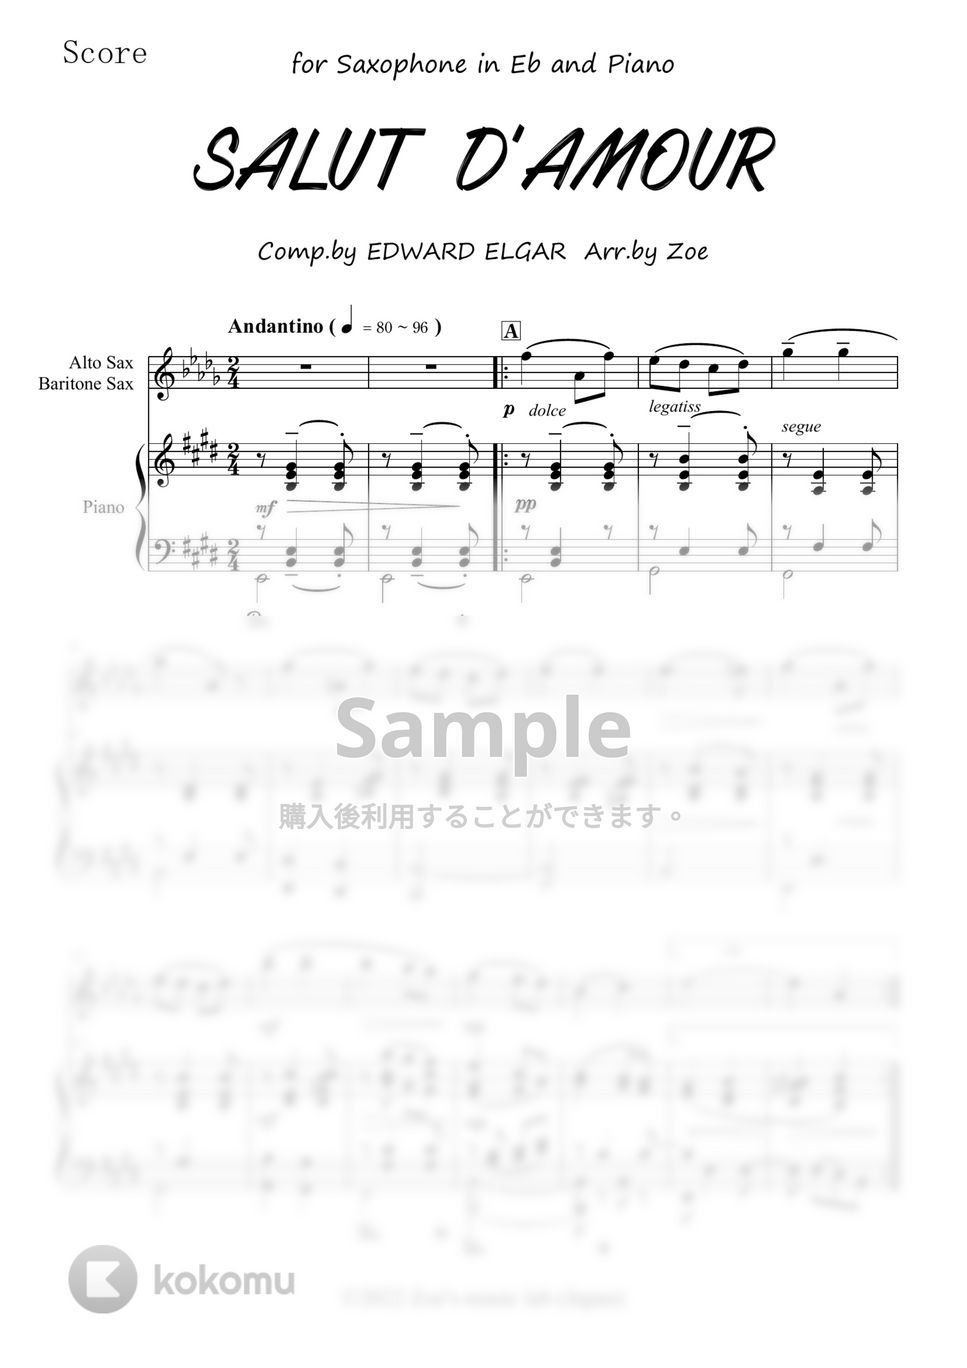 EDWARD ELGAR - 愛の挨拶 / SALUT D'AMOUR for Alto Sax ( Baritone Sax ) and Piano (原調版) (エルガー/ピアノ/サックス/) by Zoe